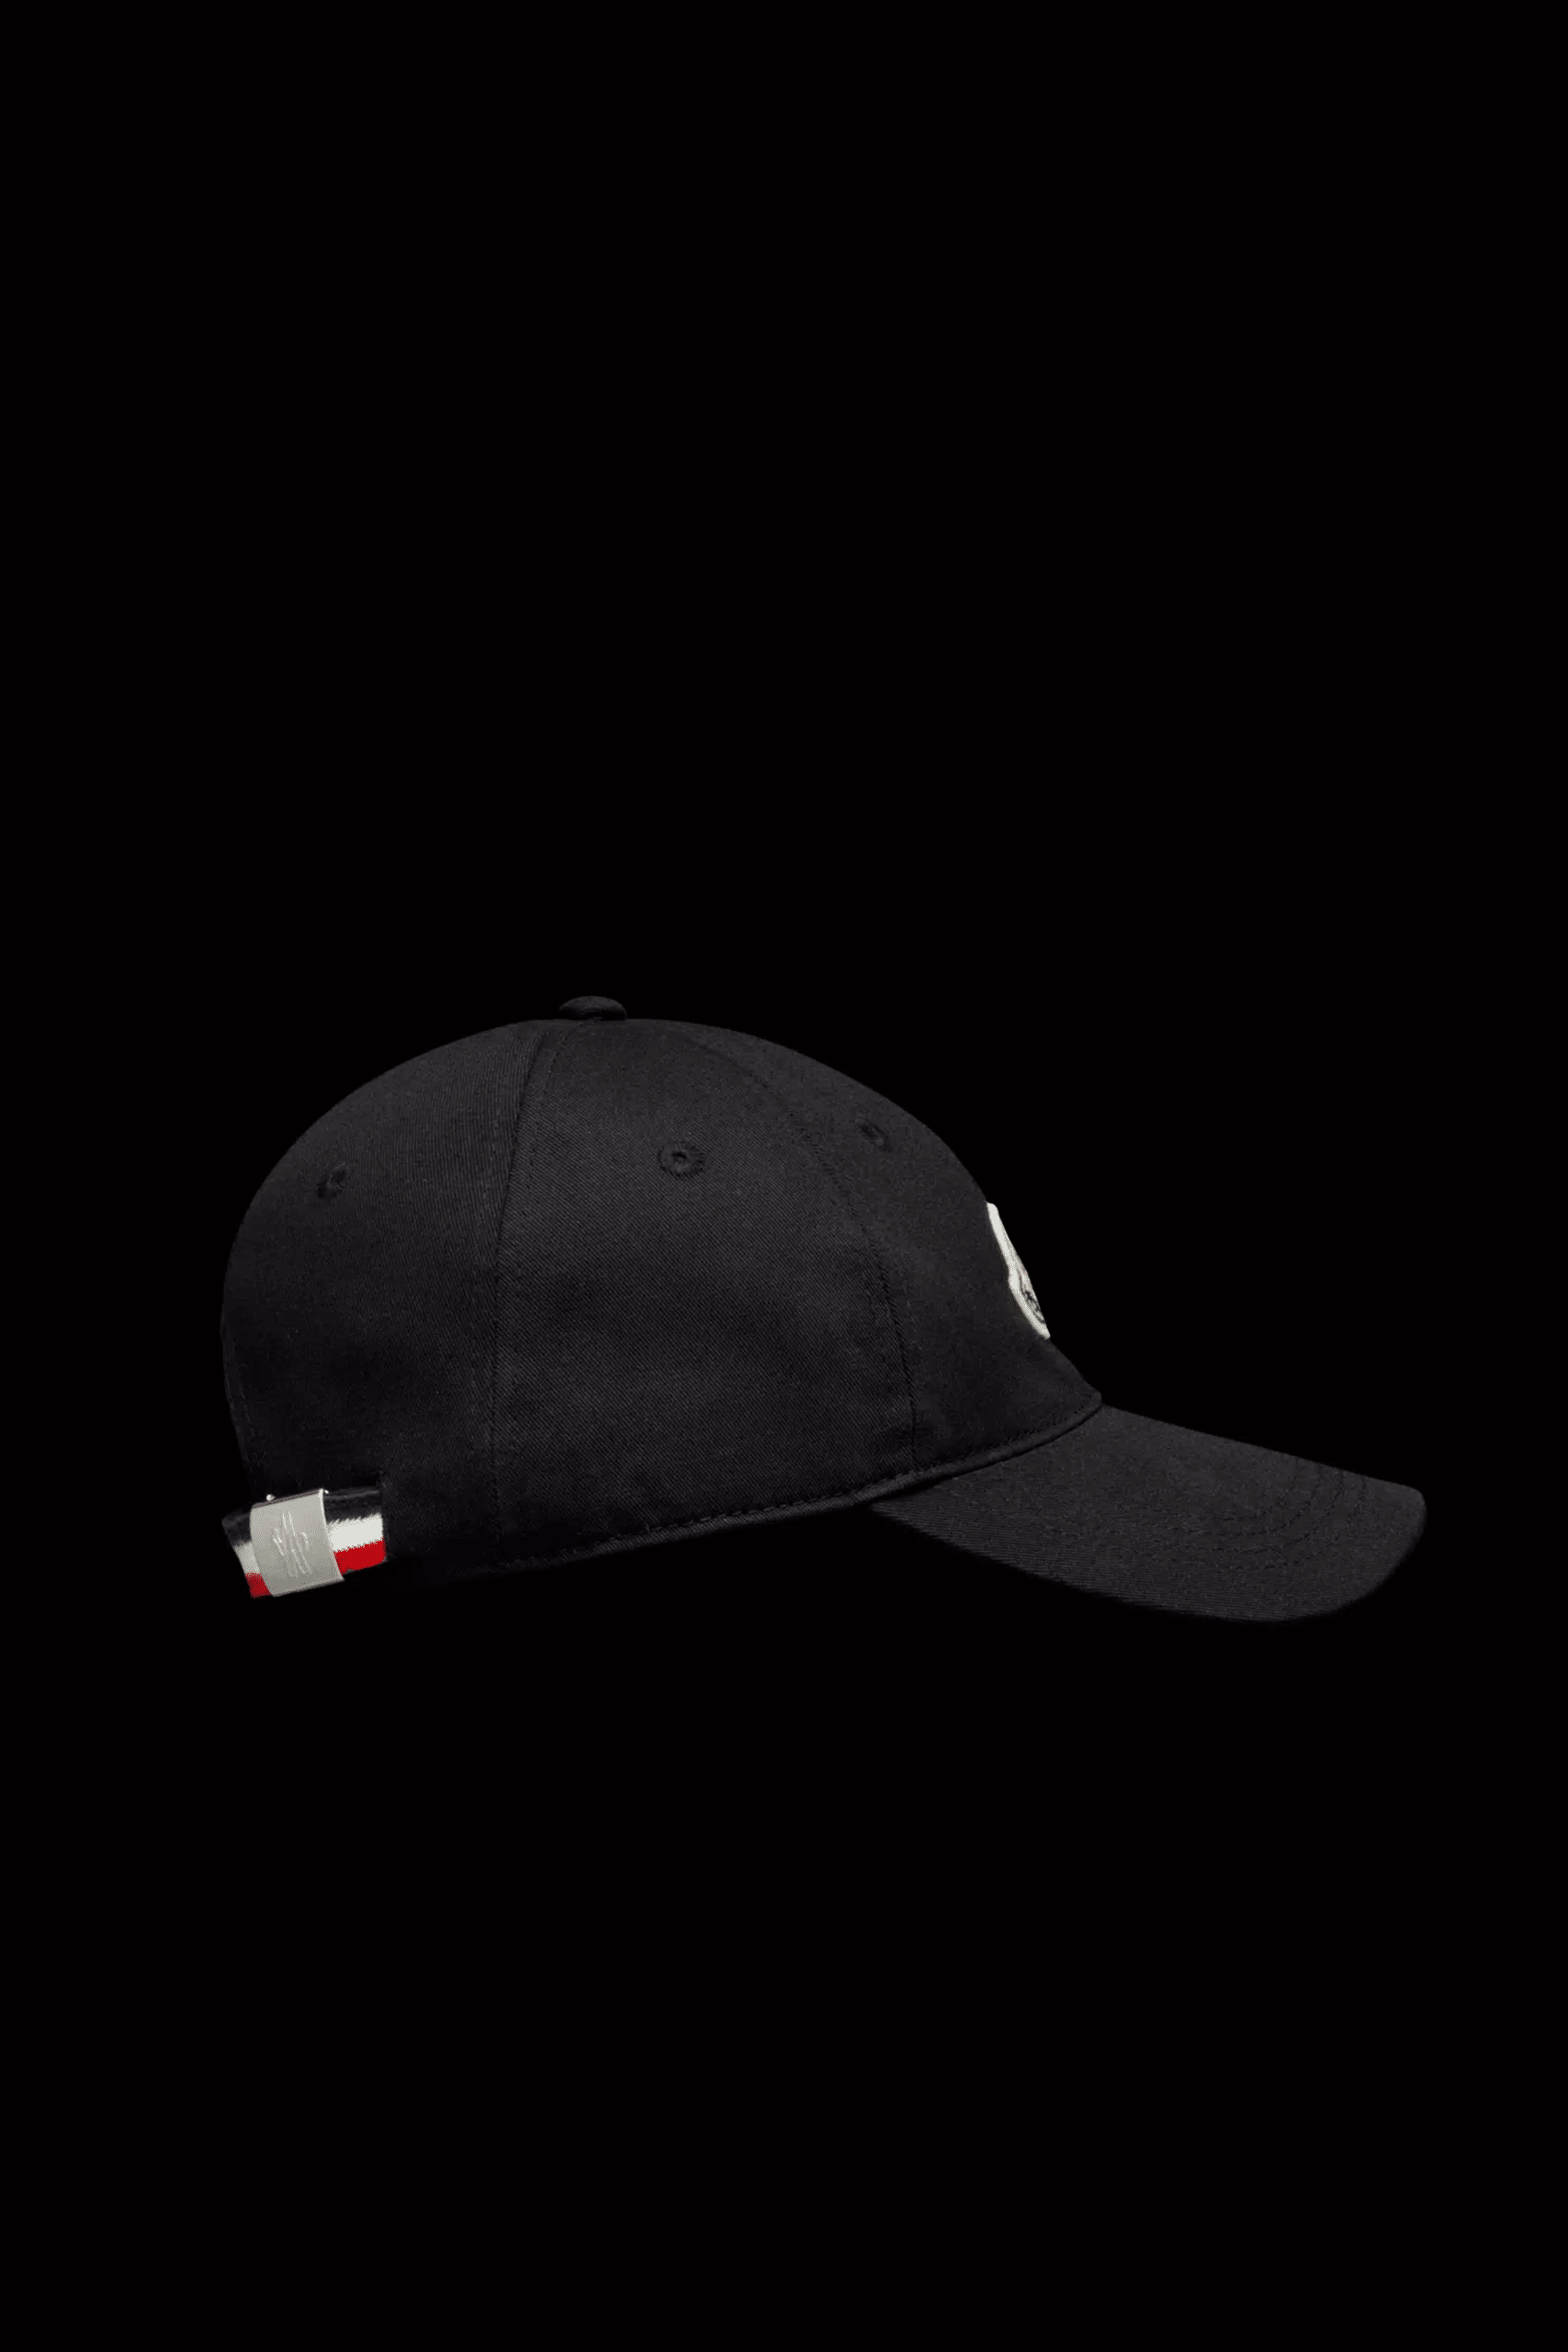 Casquette de Baseball DSQUARED coton noir logo ICON palmiers multicolore